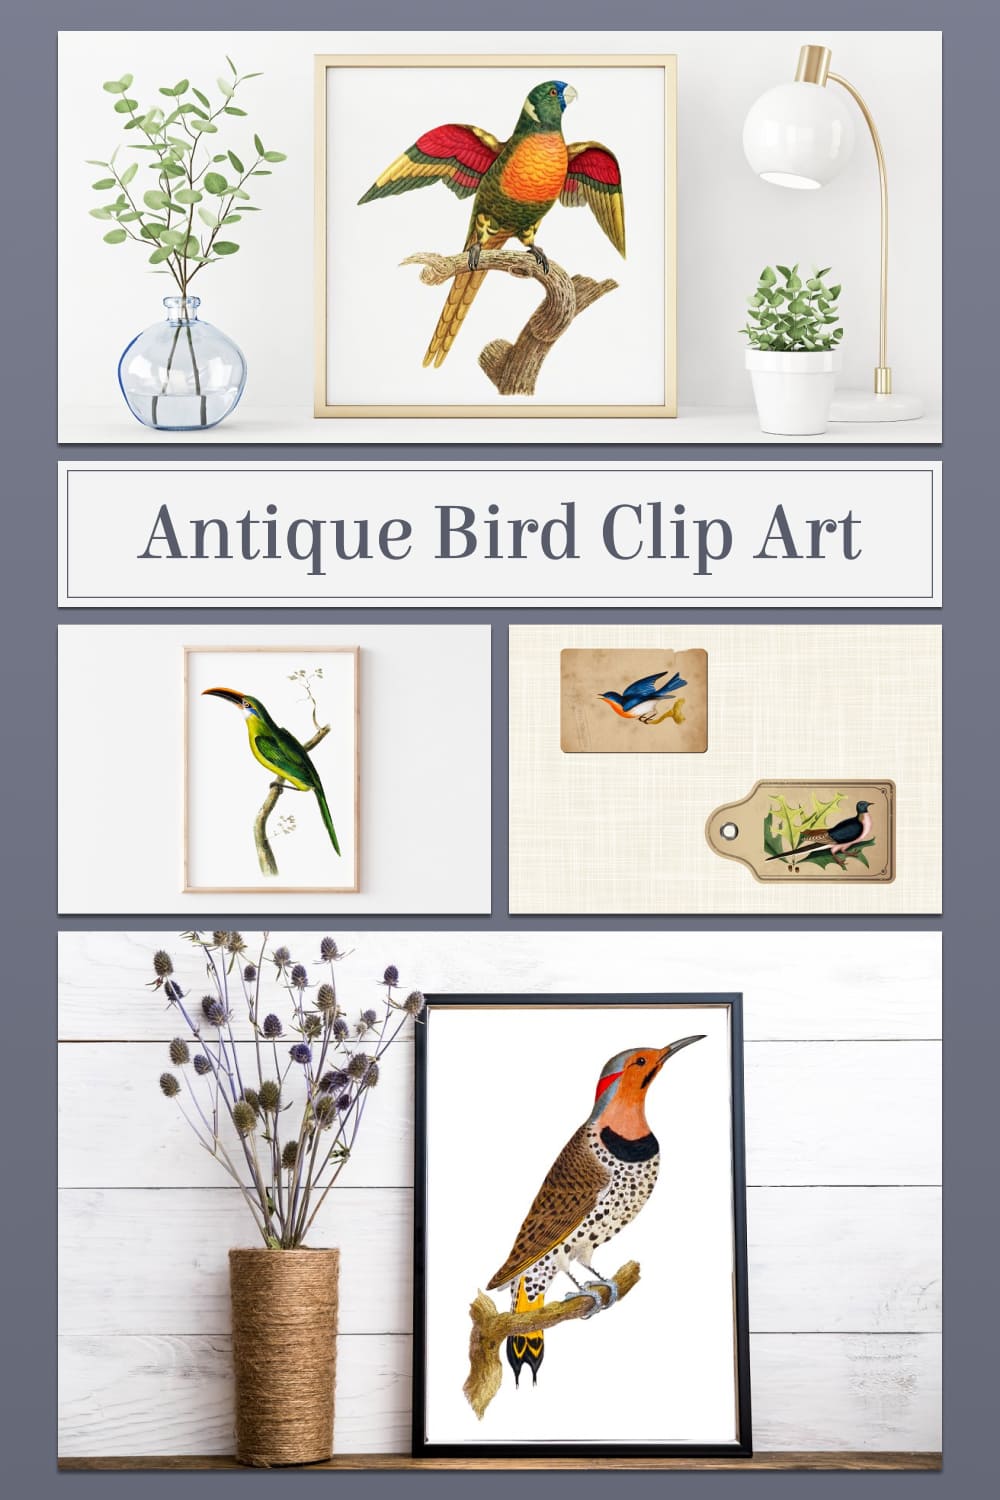 Antique bird clip art - pinterest image preview.